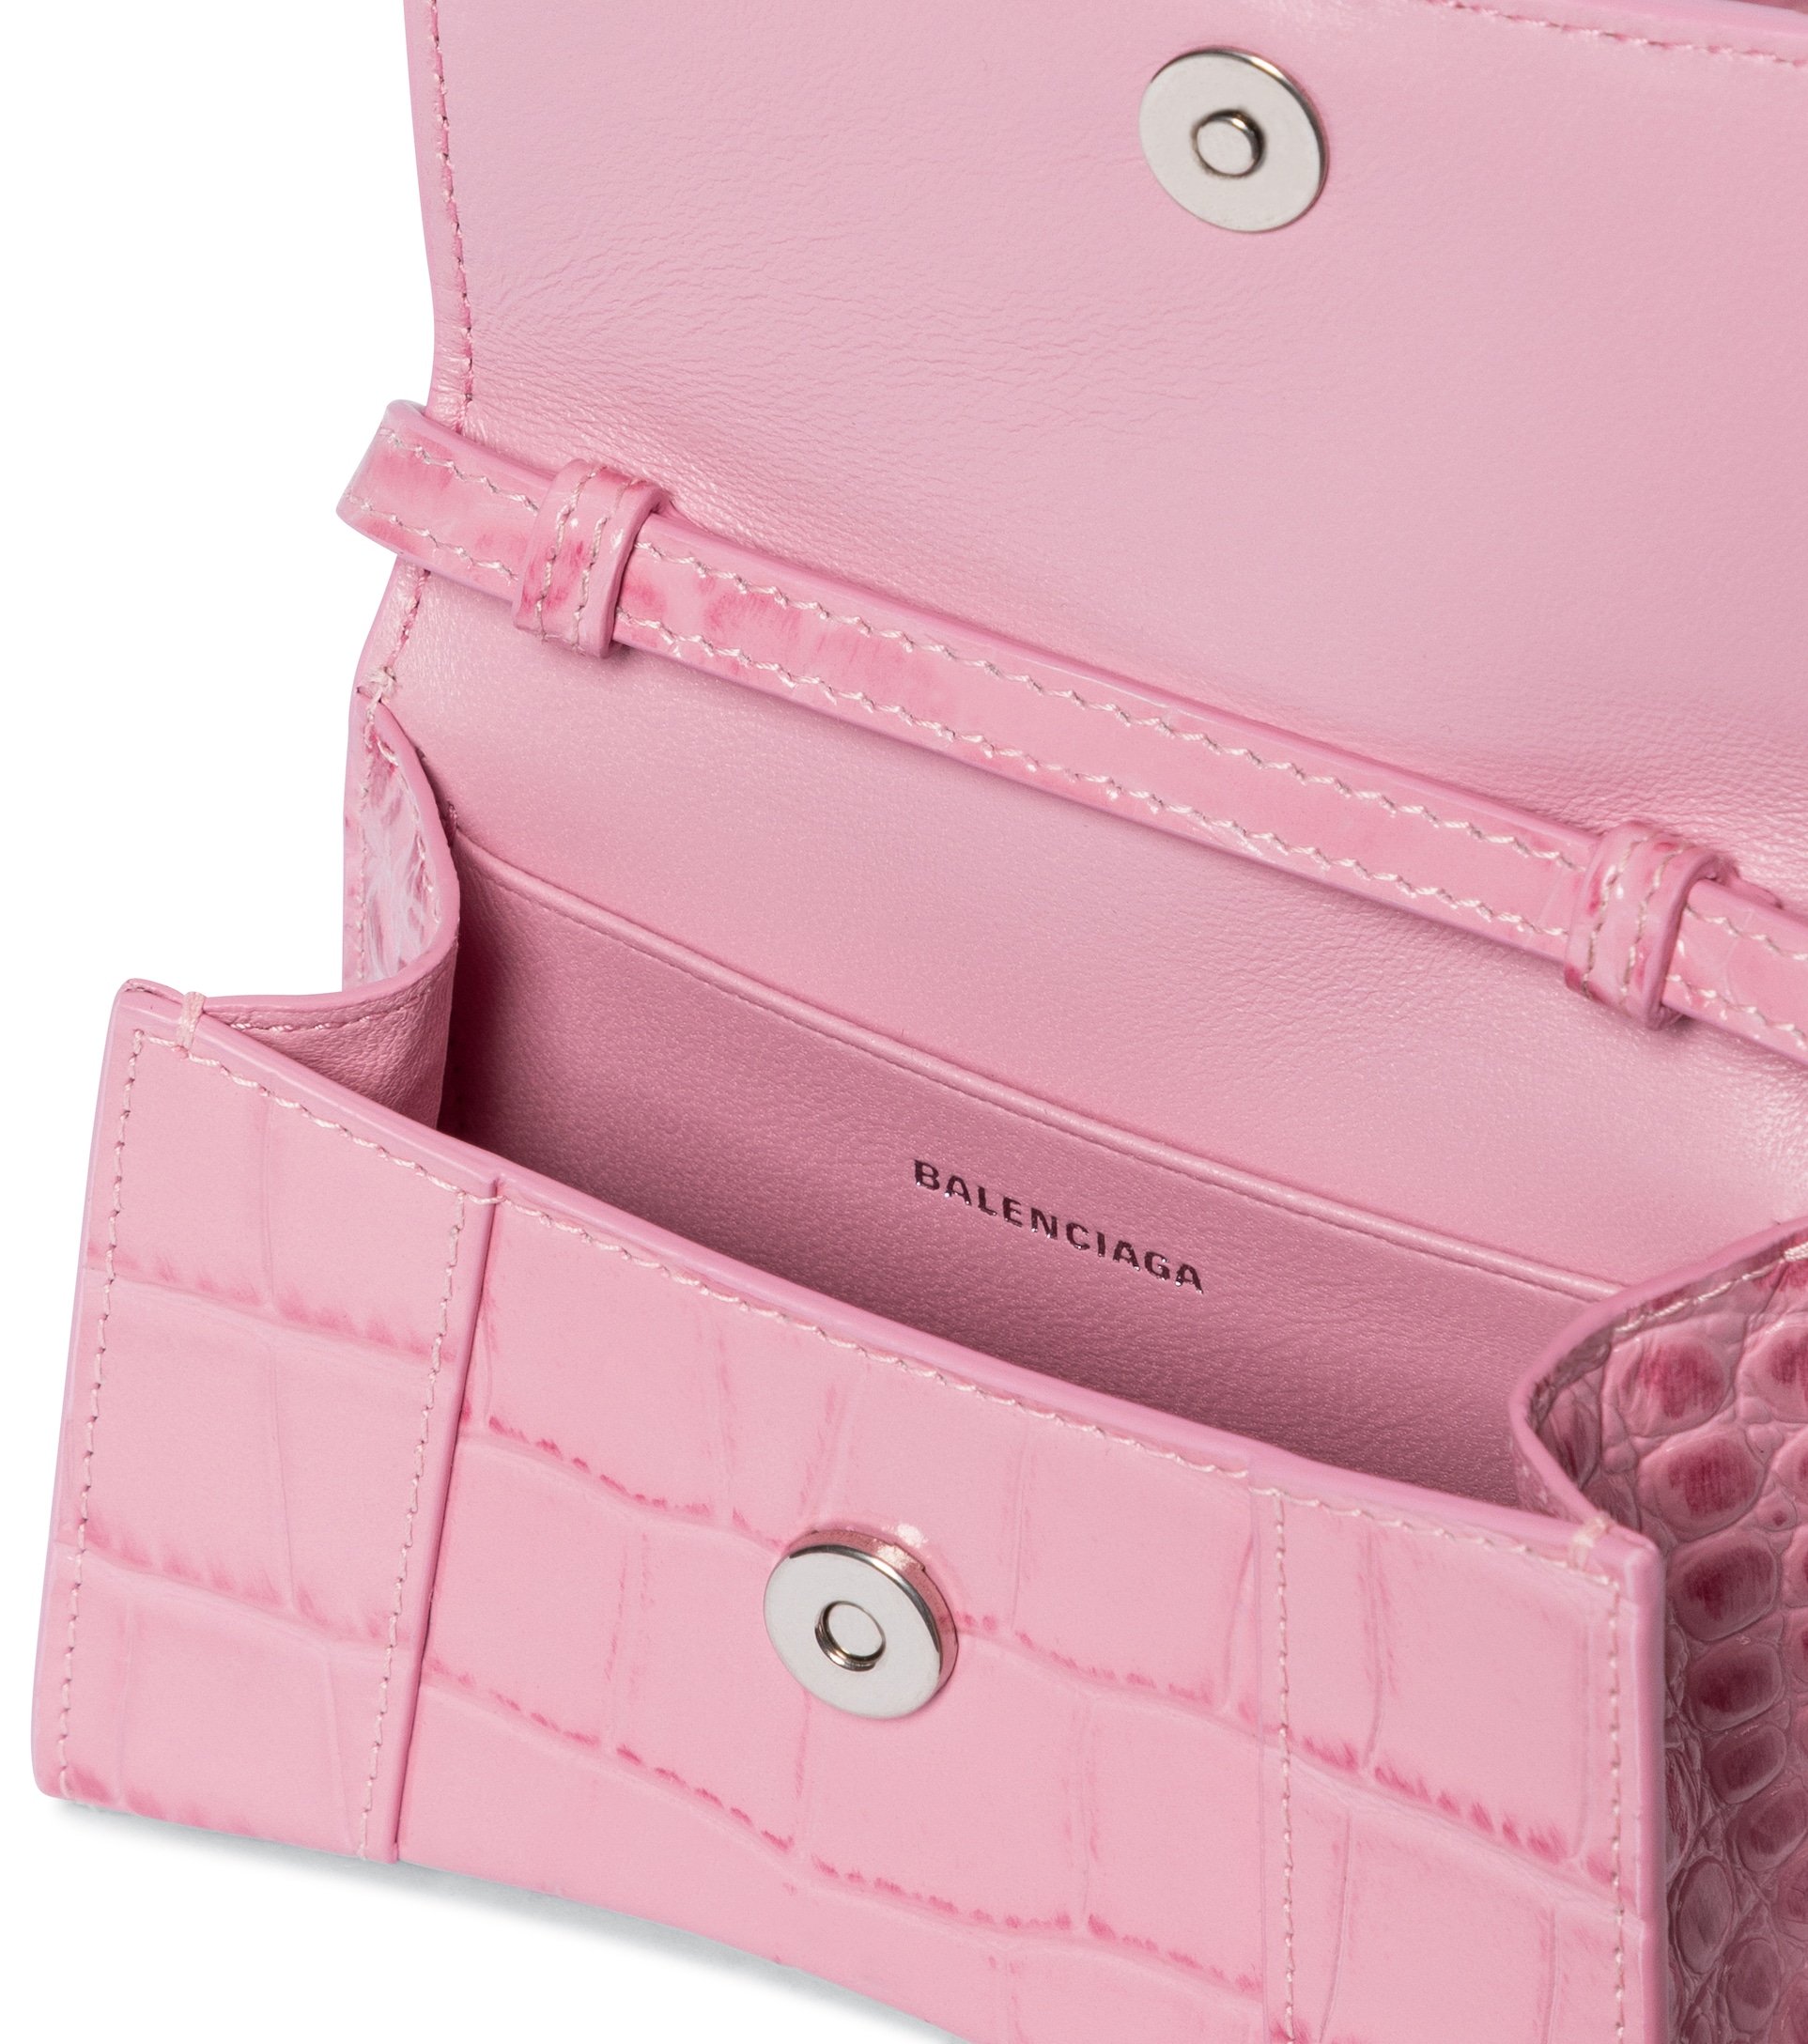 Luxury handbag  Hourglass Balenciaga handbag in smooth light pink leather